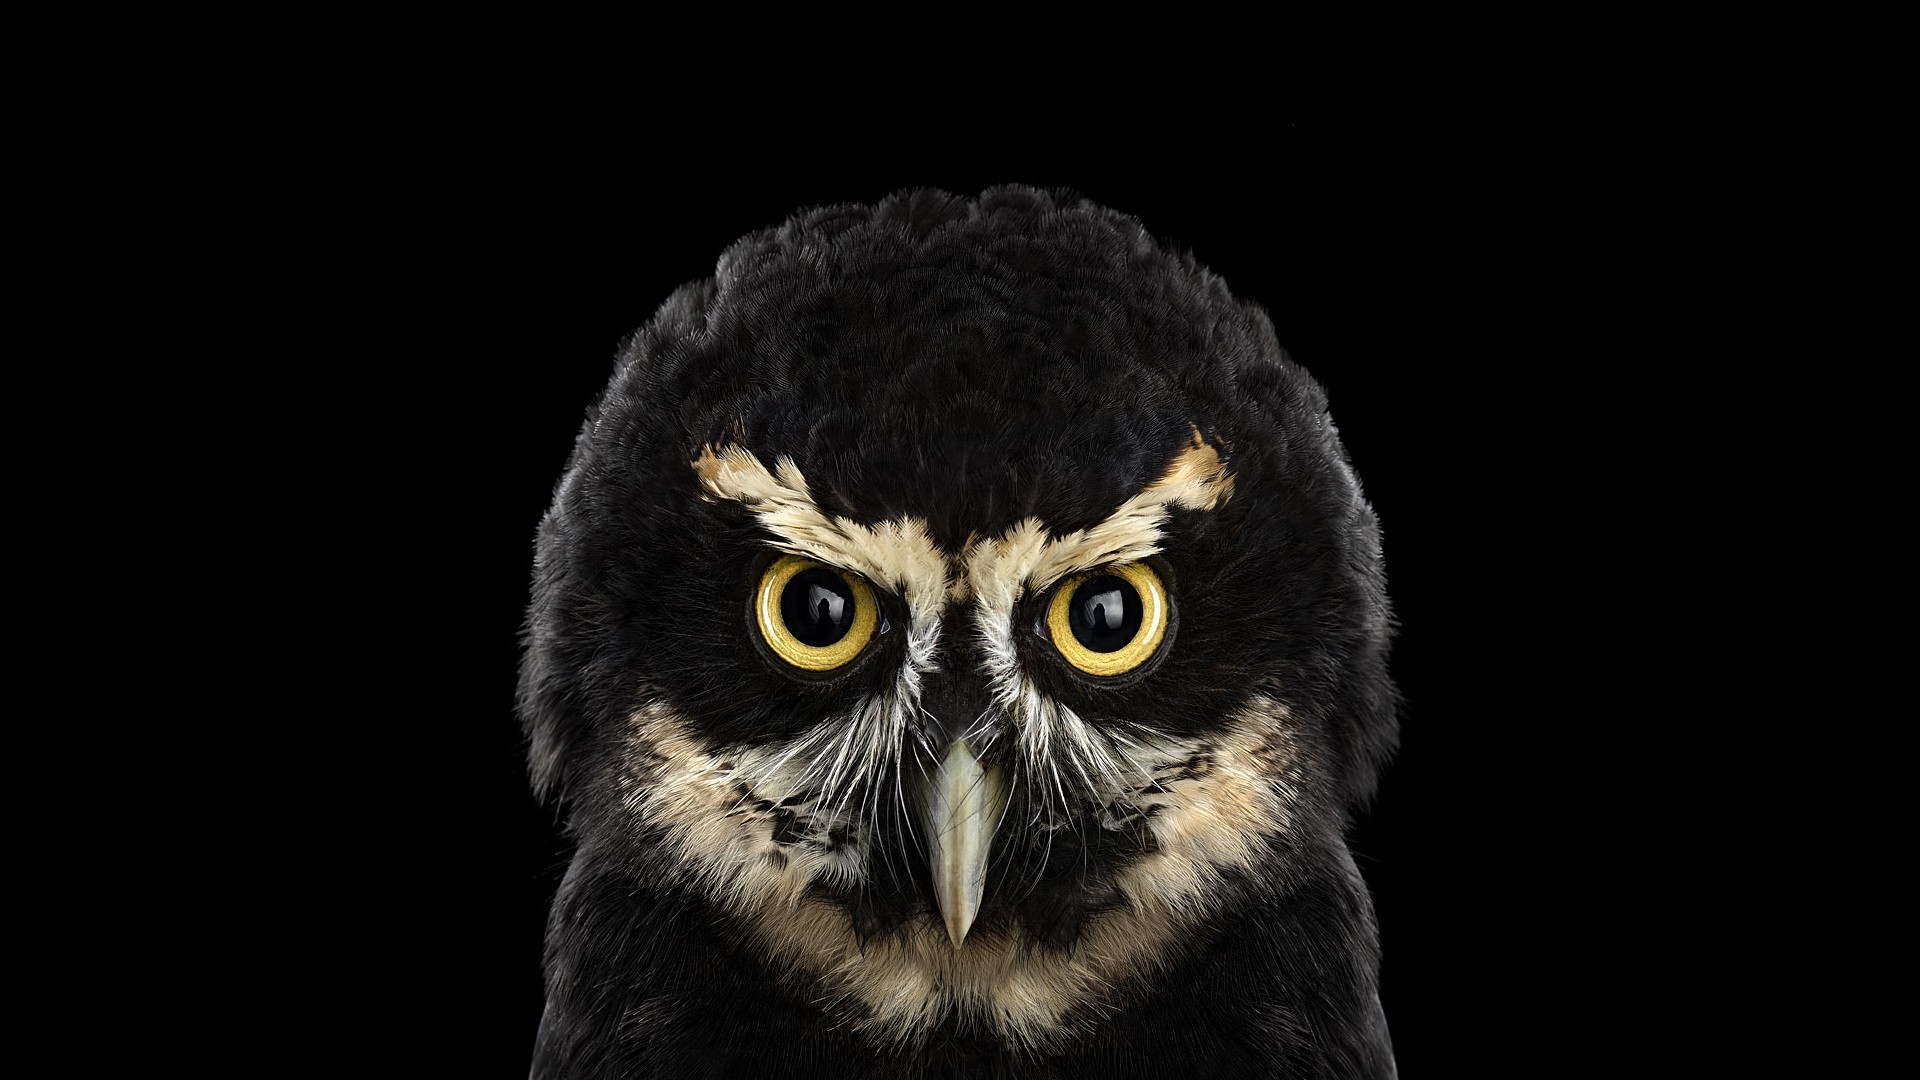 General 1920x1080 photography animals birds owl simple background black black background